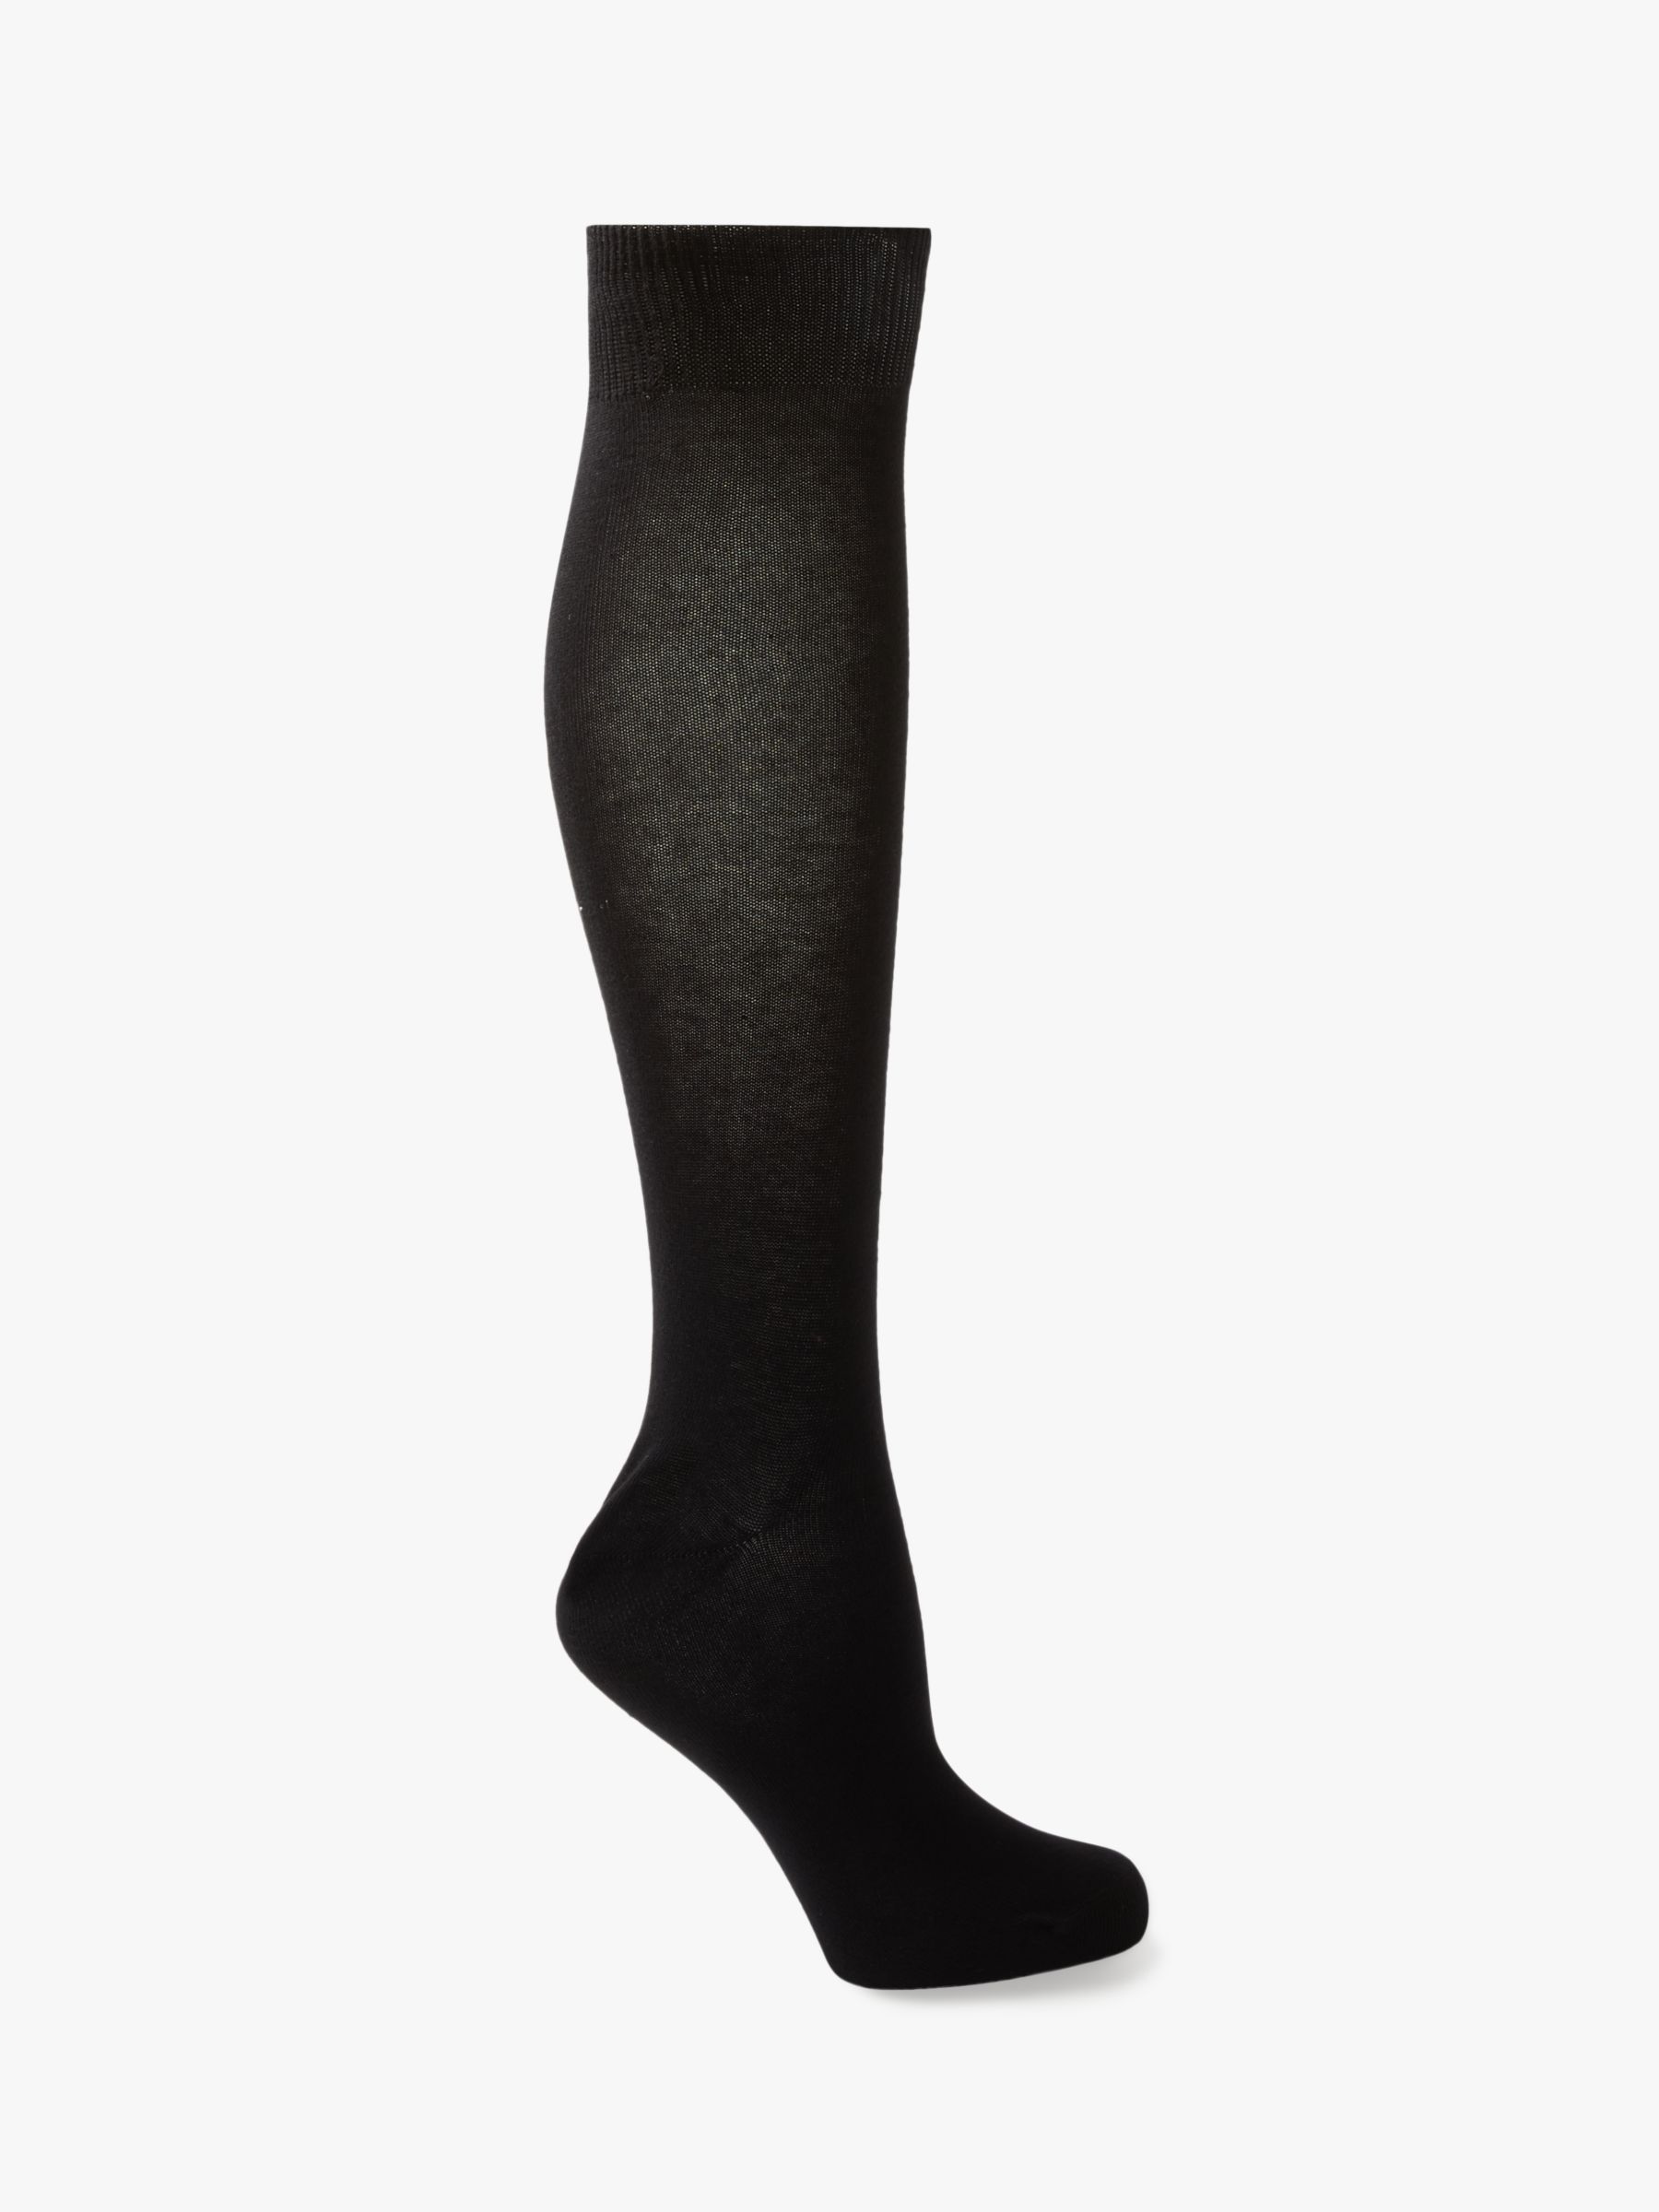 John Lewis & Partners Women's Cotton Rich Knee High Socks, Pack of 3 ...